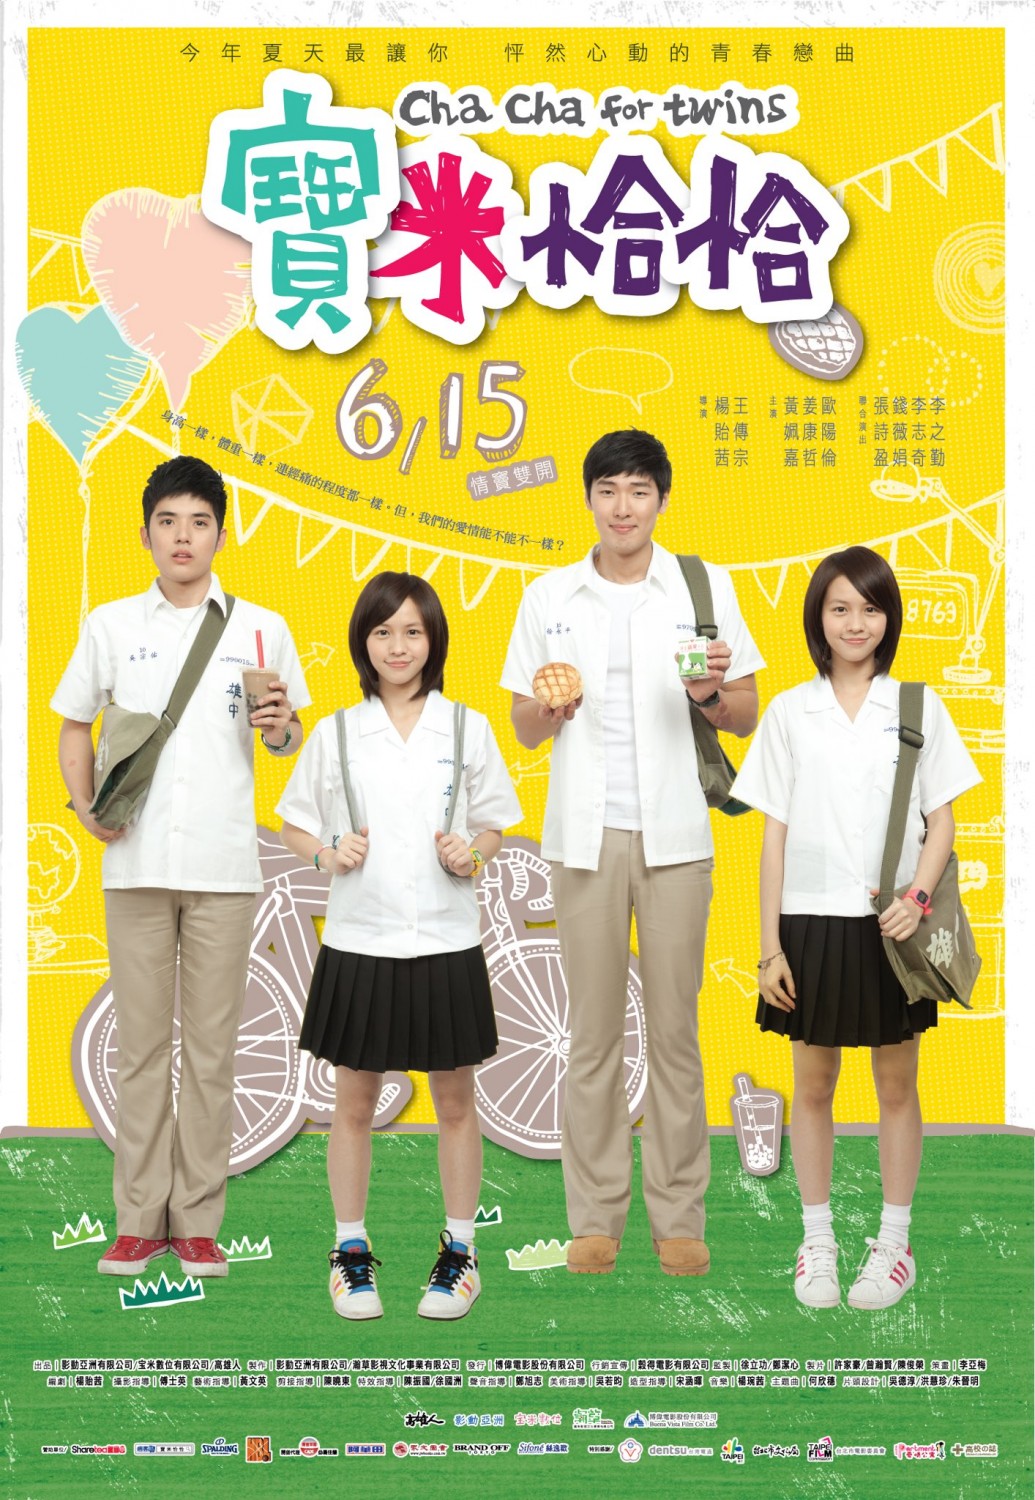 Extra Large Movie Poster Image for Bao mi qia qia 